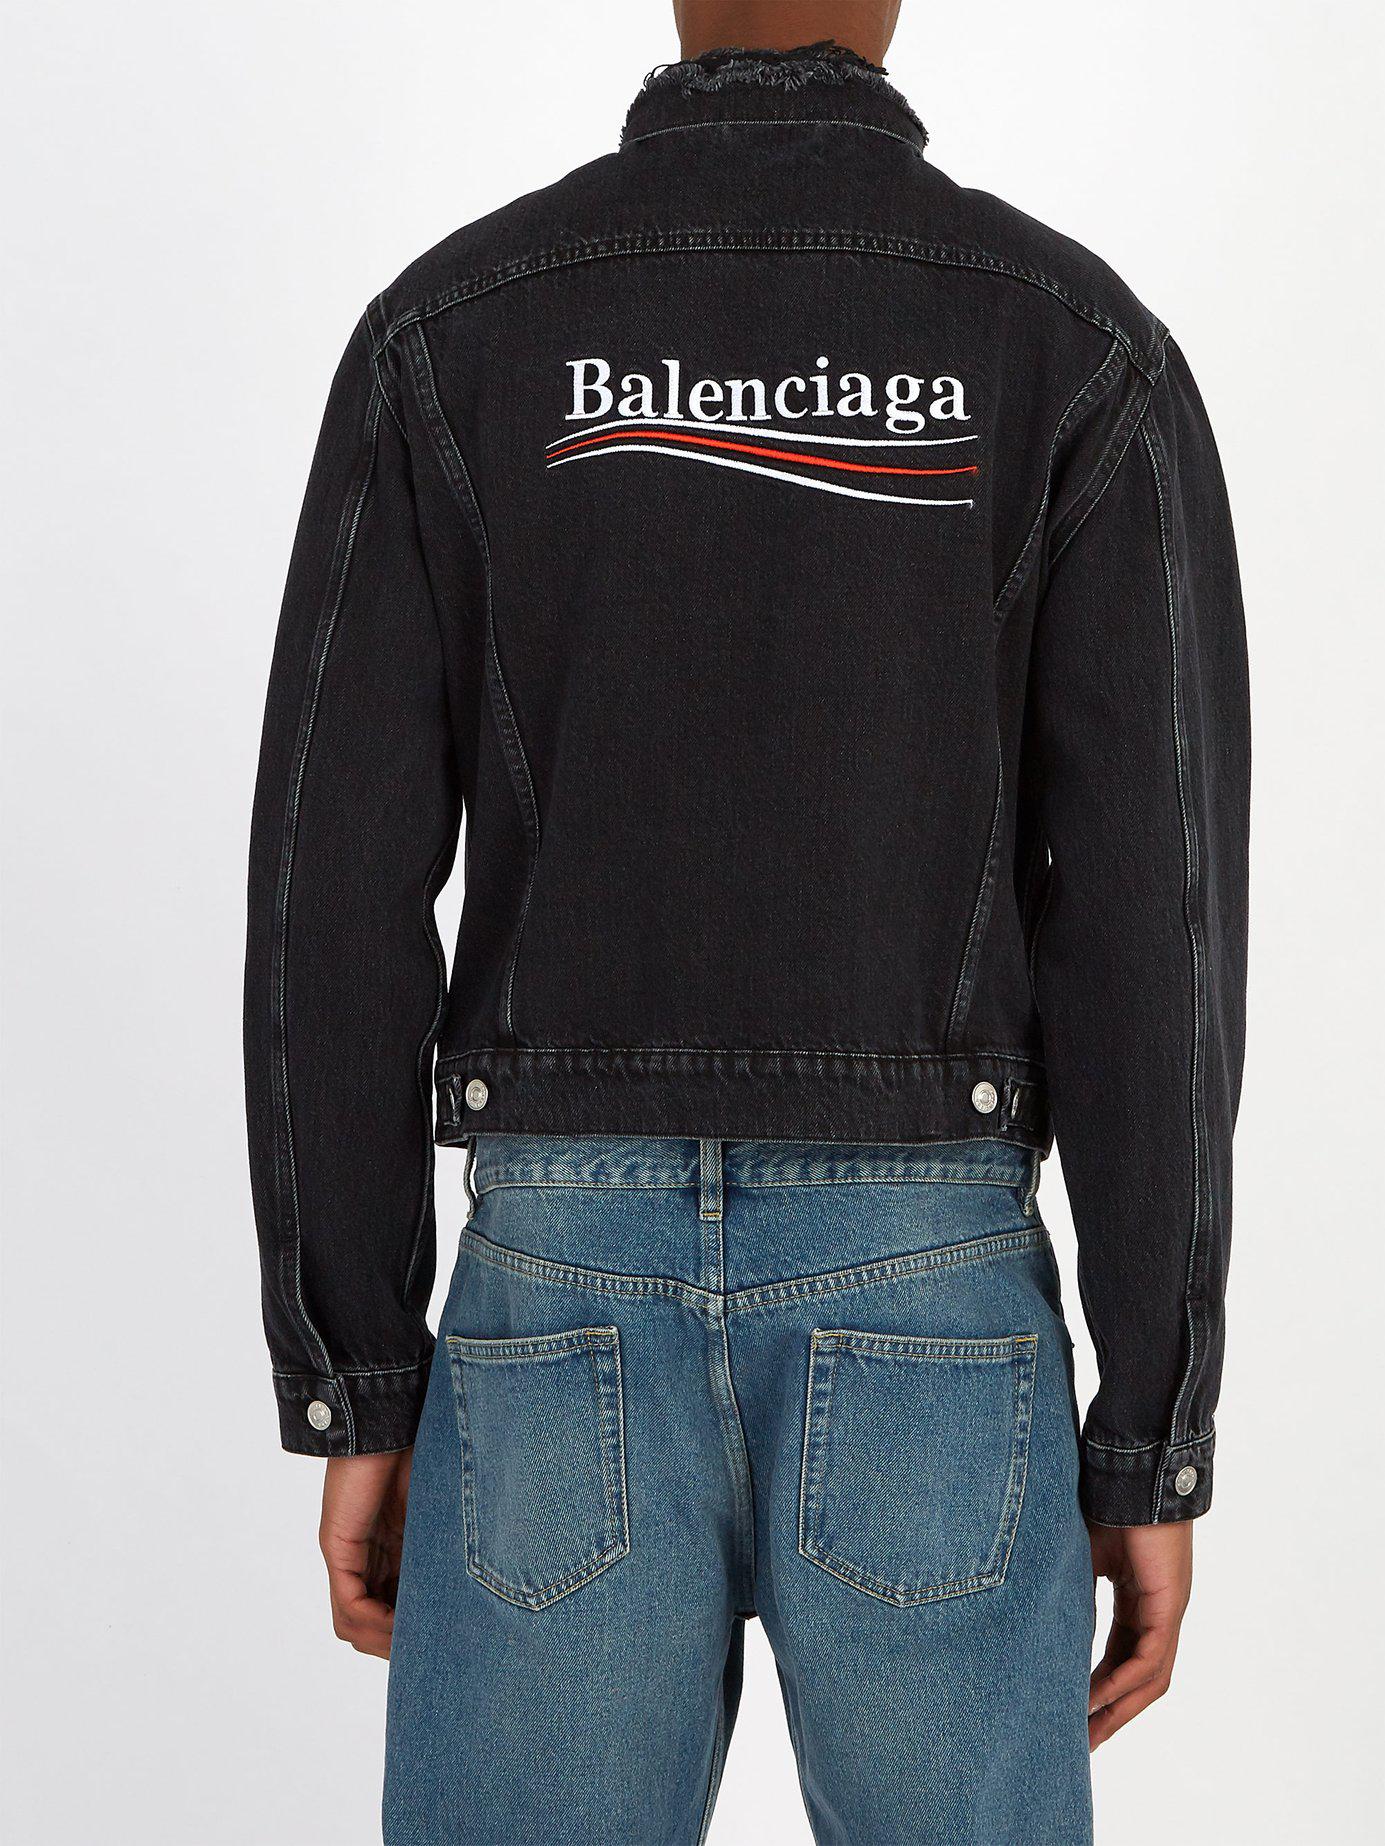 Balenciaga Distressed Denim Jacket in Black for Men - Lyst